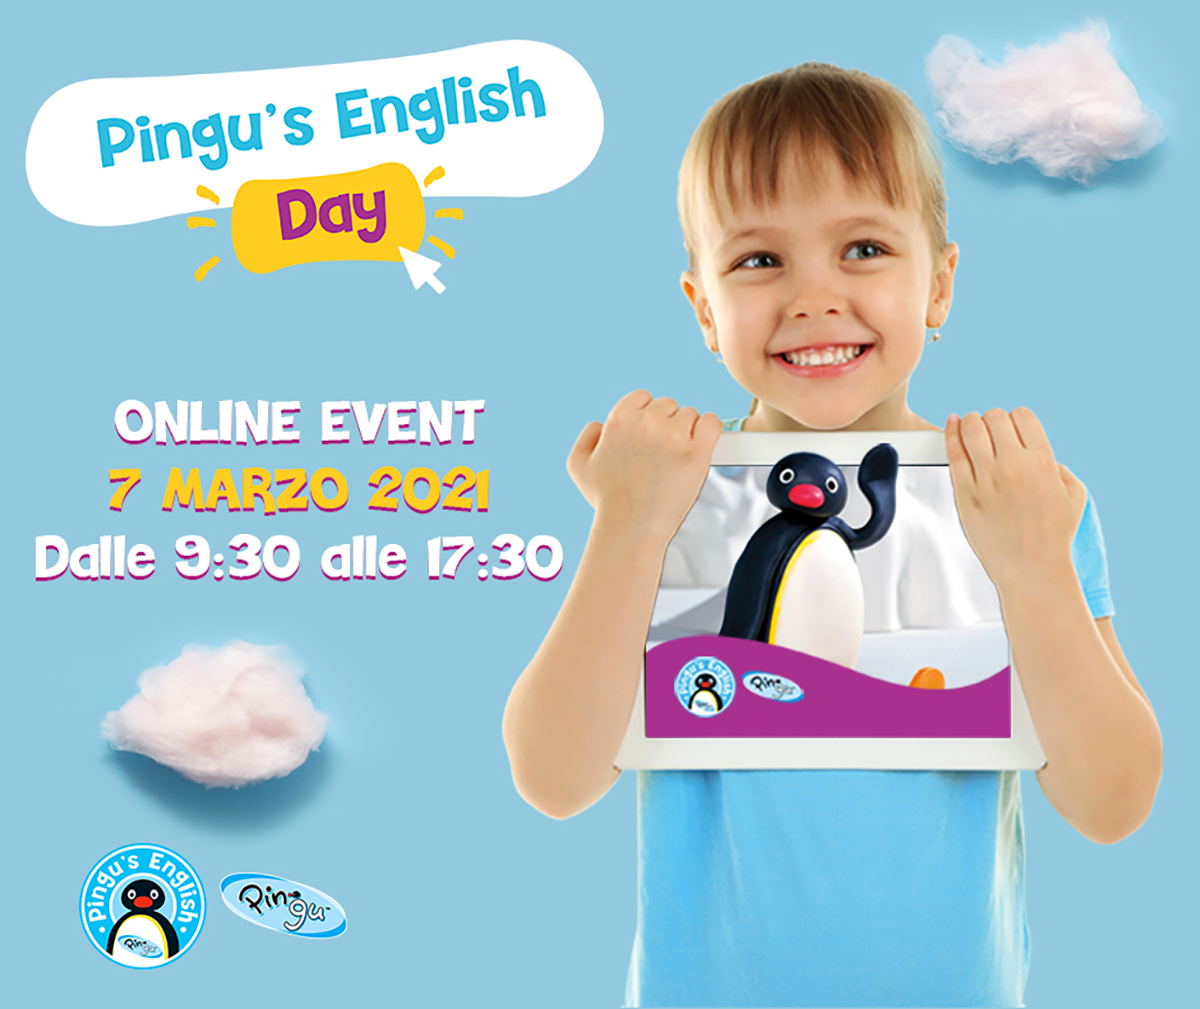 Pingu's English day